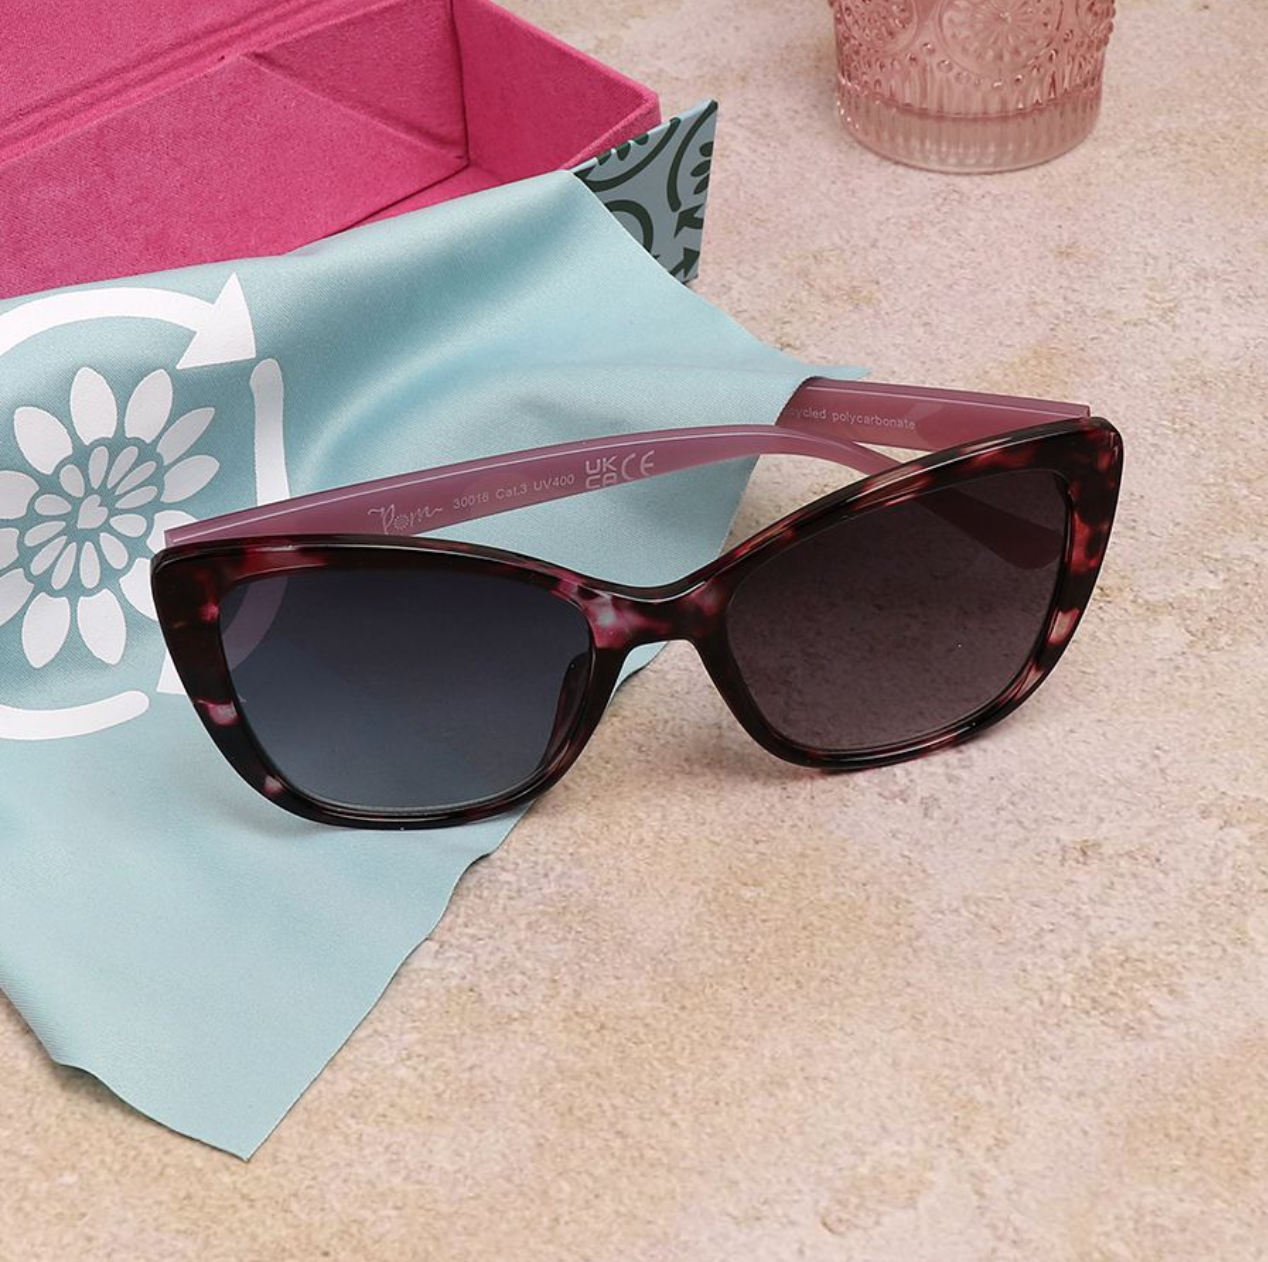 Recycled pink tortoiseshell frame sunglasses